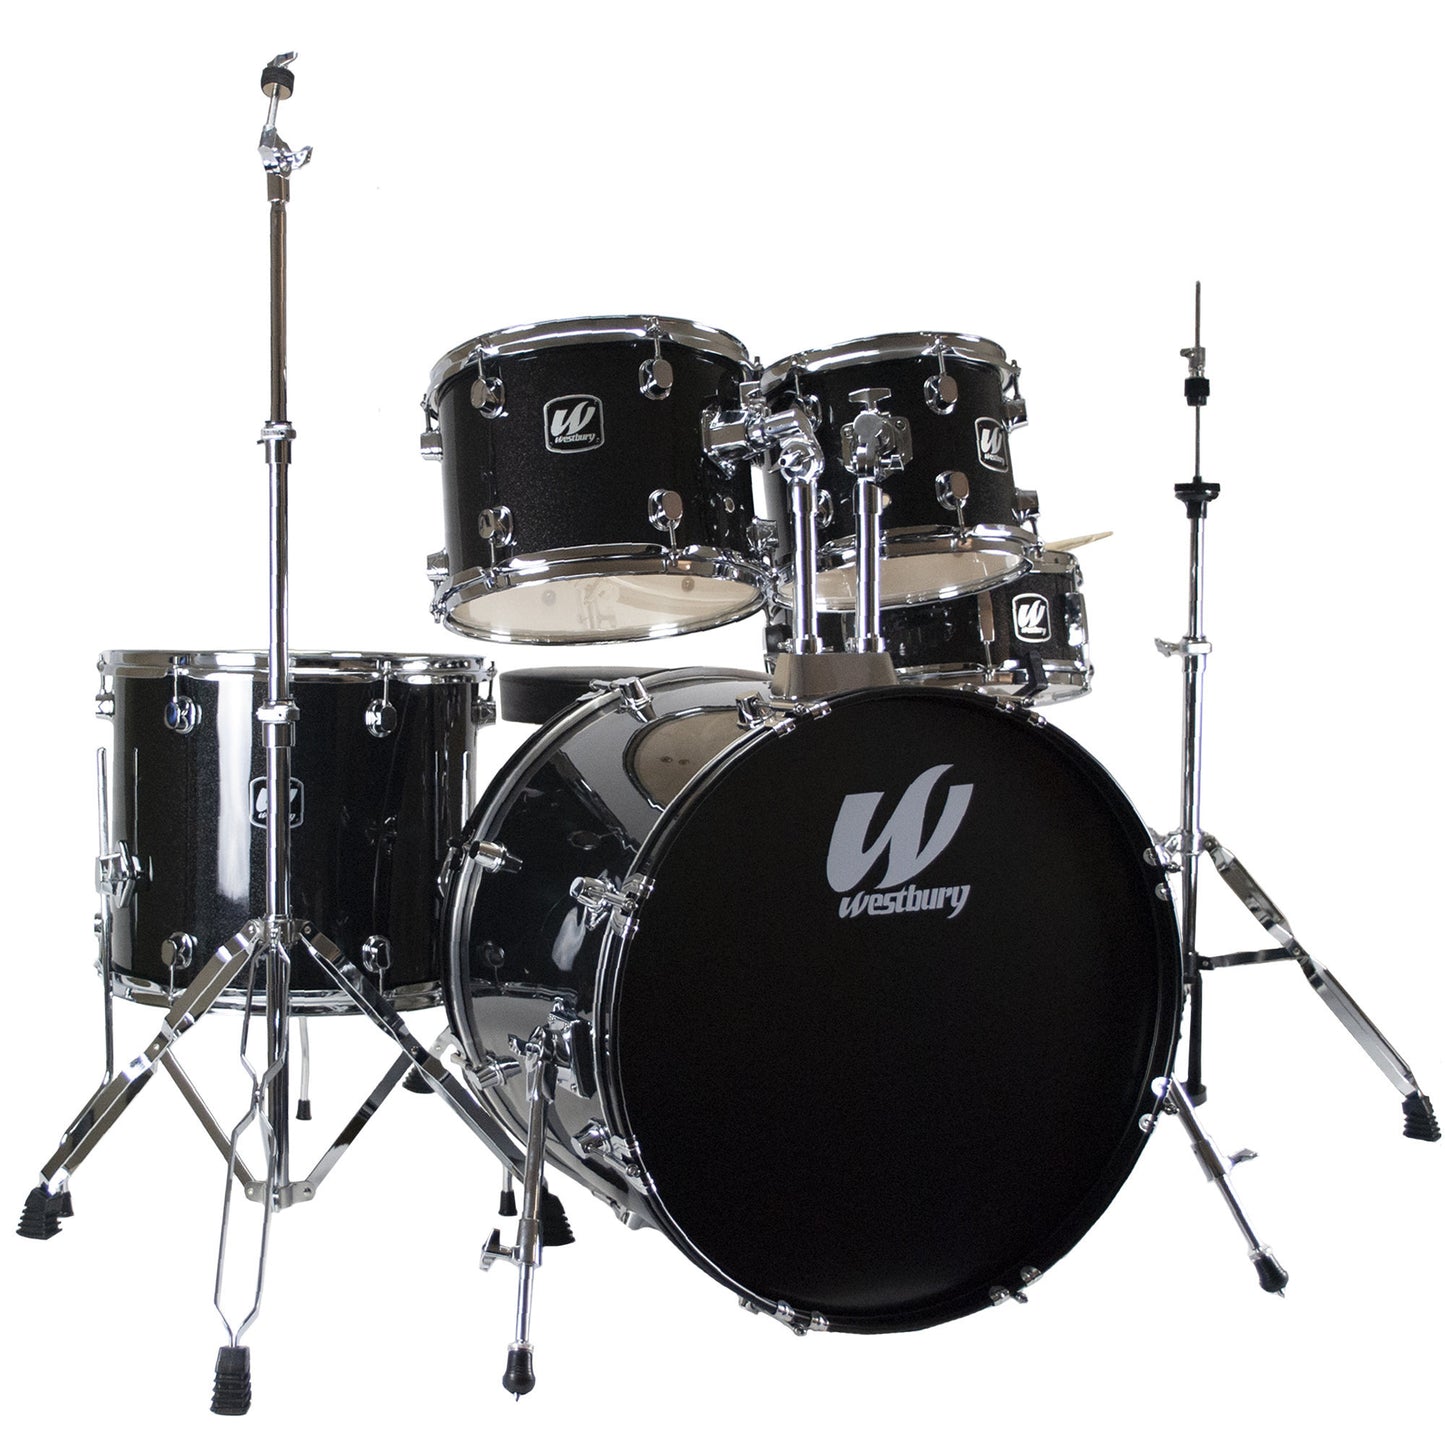 Westbury 5 Piece Stage Drum Kit with Throne in Black Sparkle